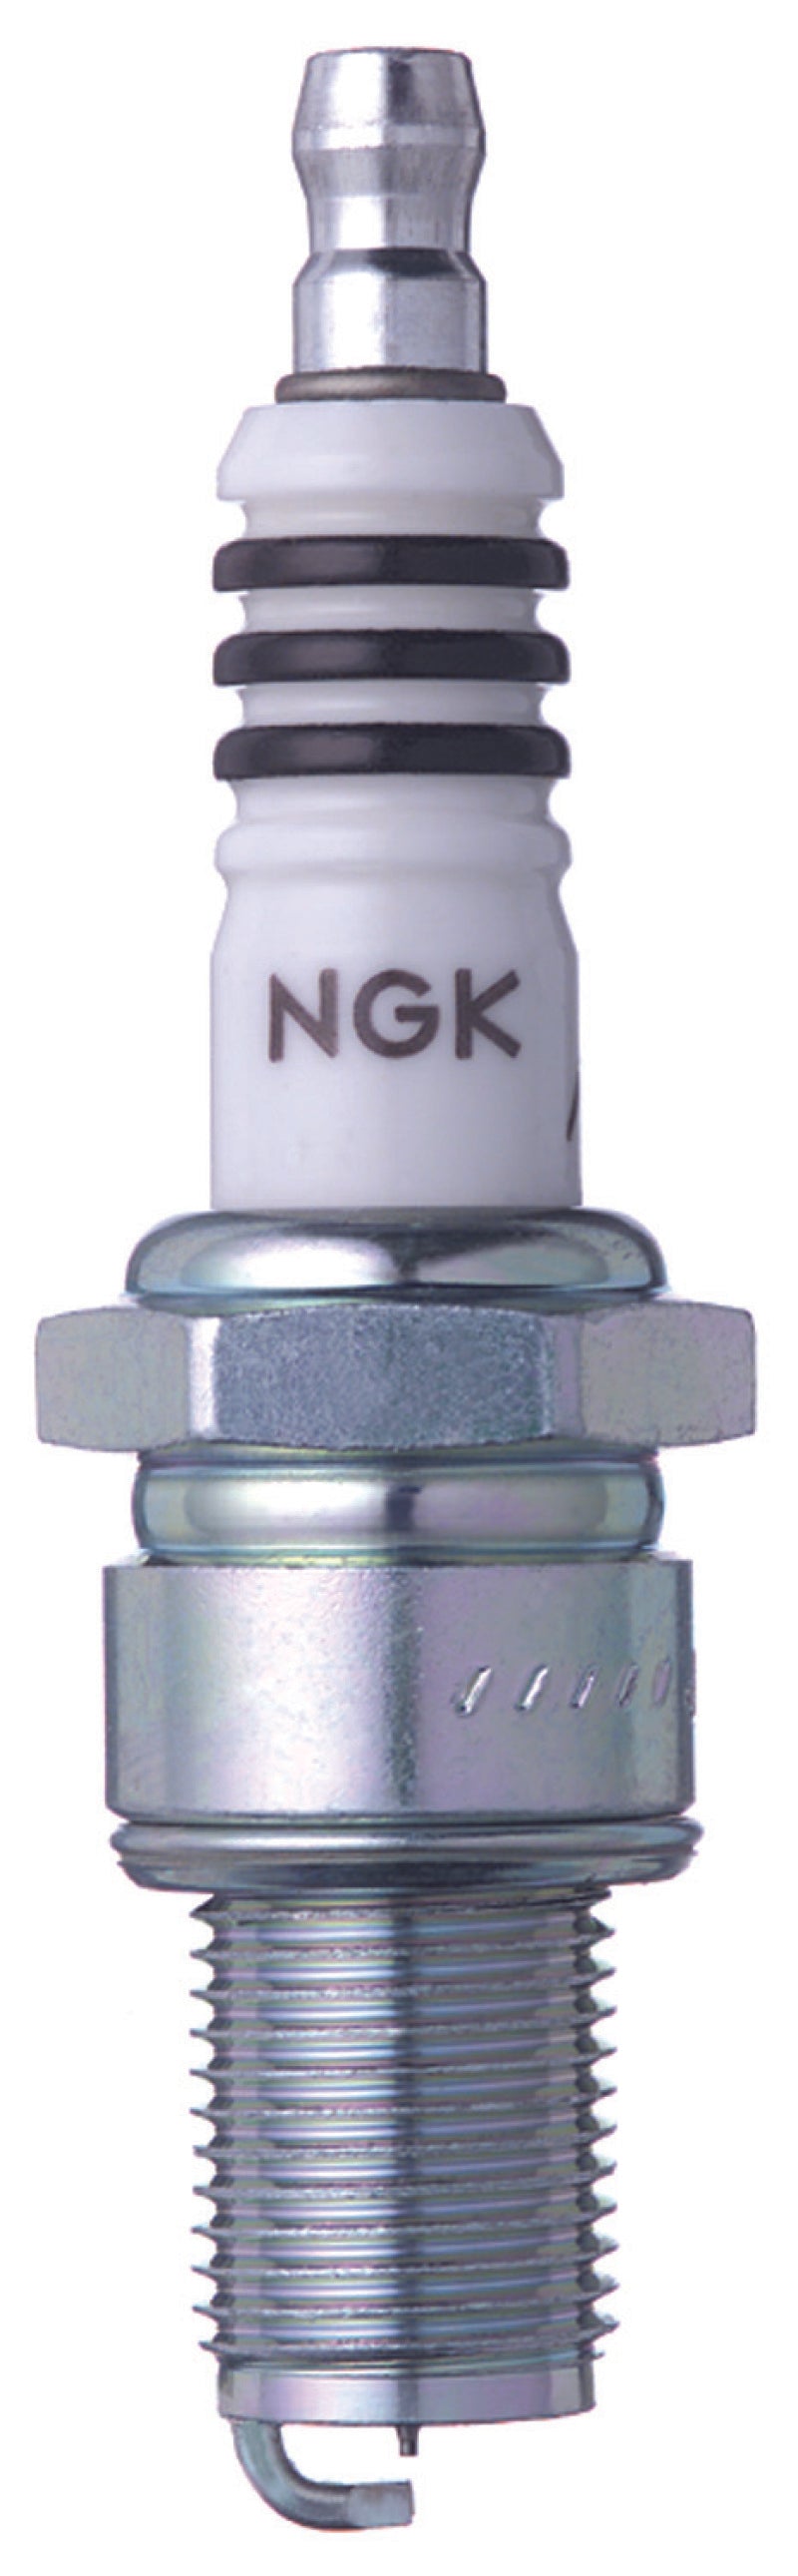 NGK Iridium Spark Plug Box of 4 (BR8EIX).